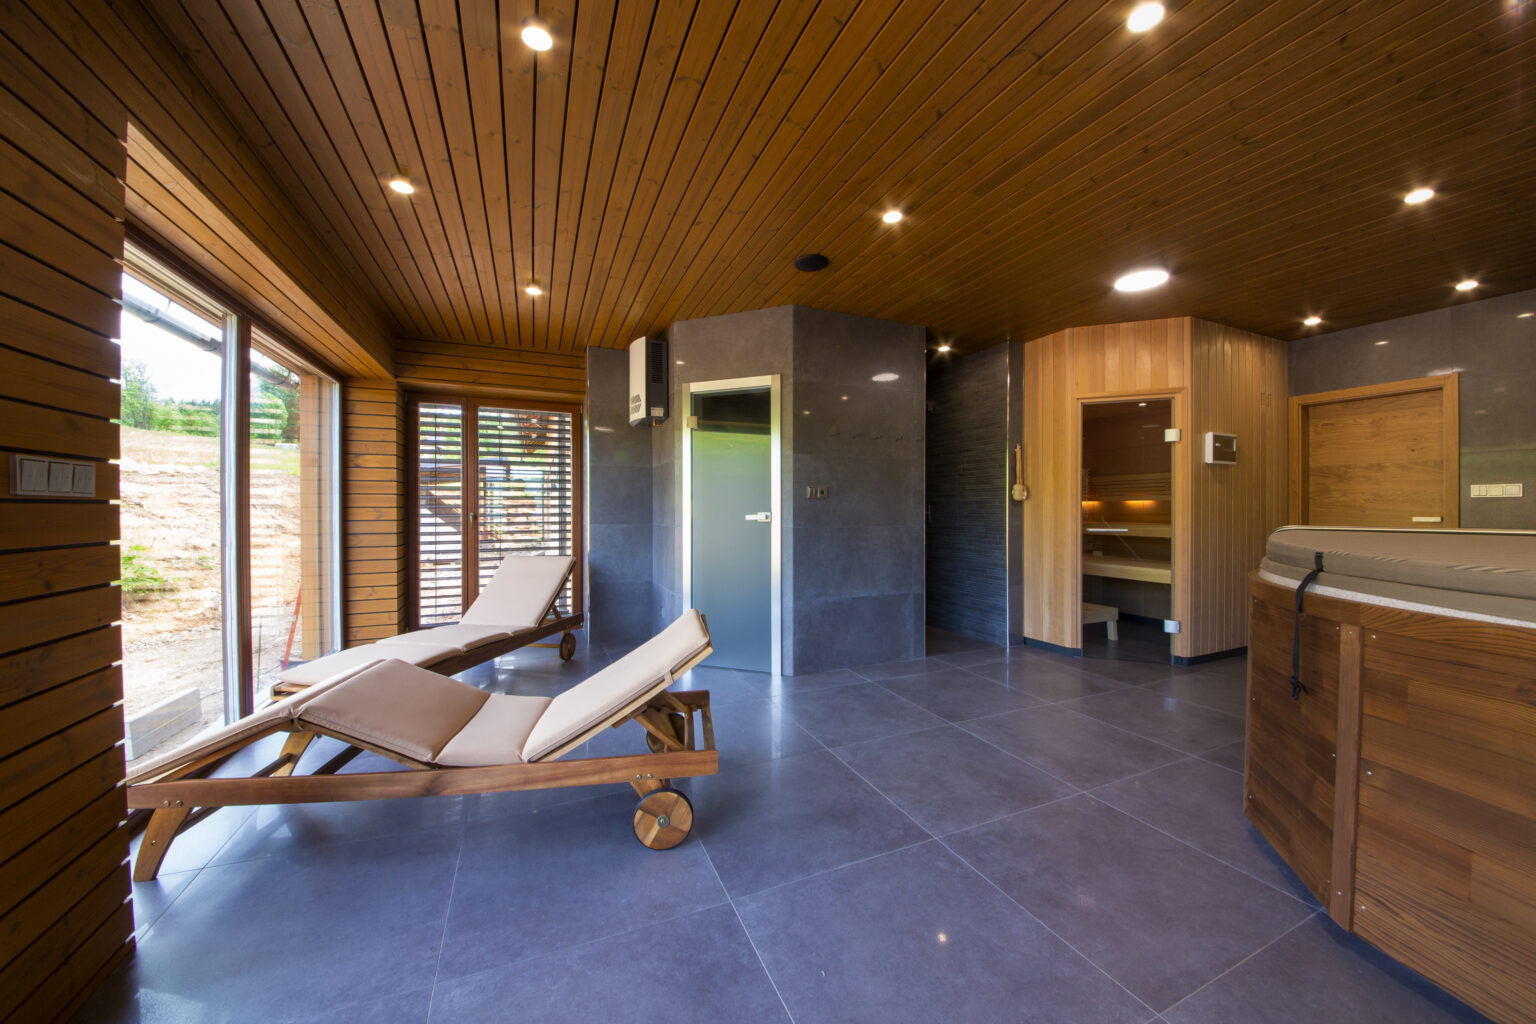 Súkromné „hviezdne“ wellness s prémiovou saunou